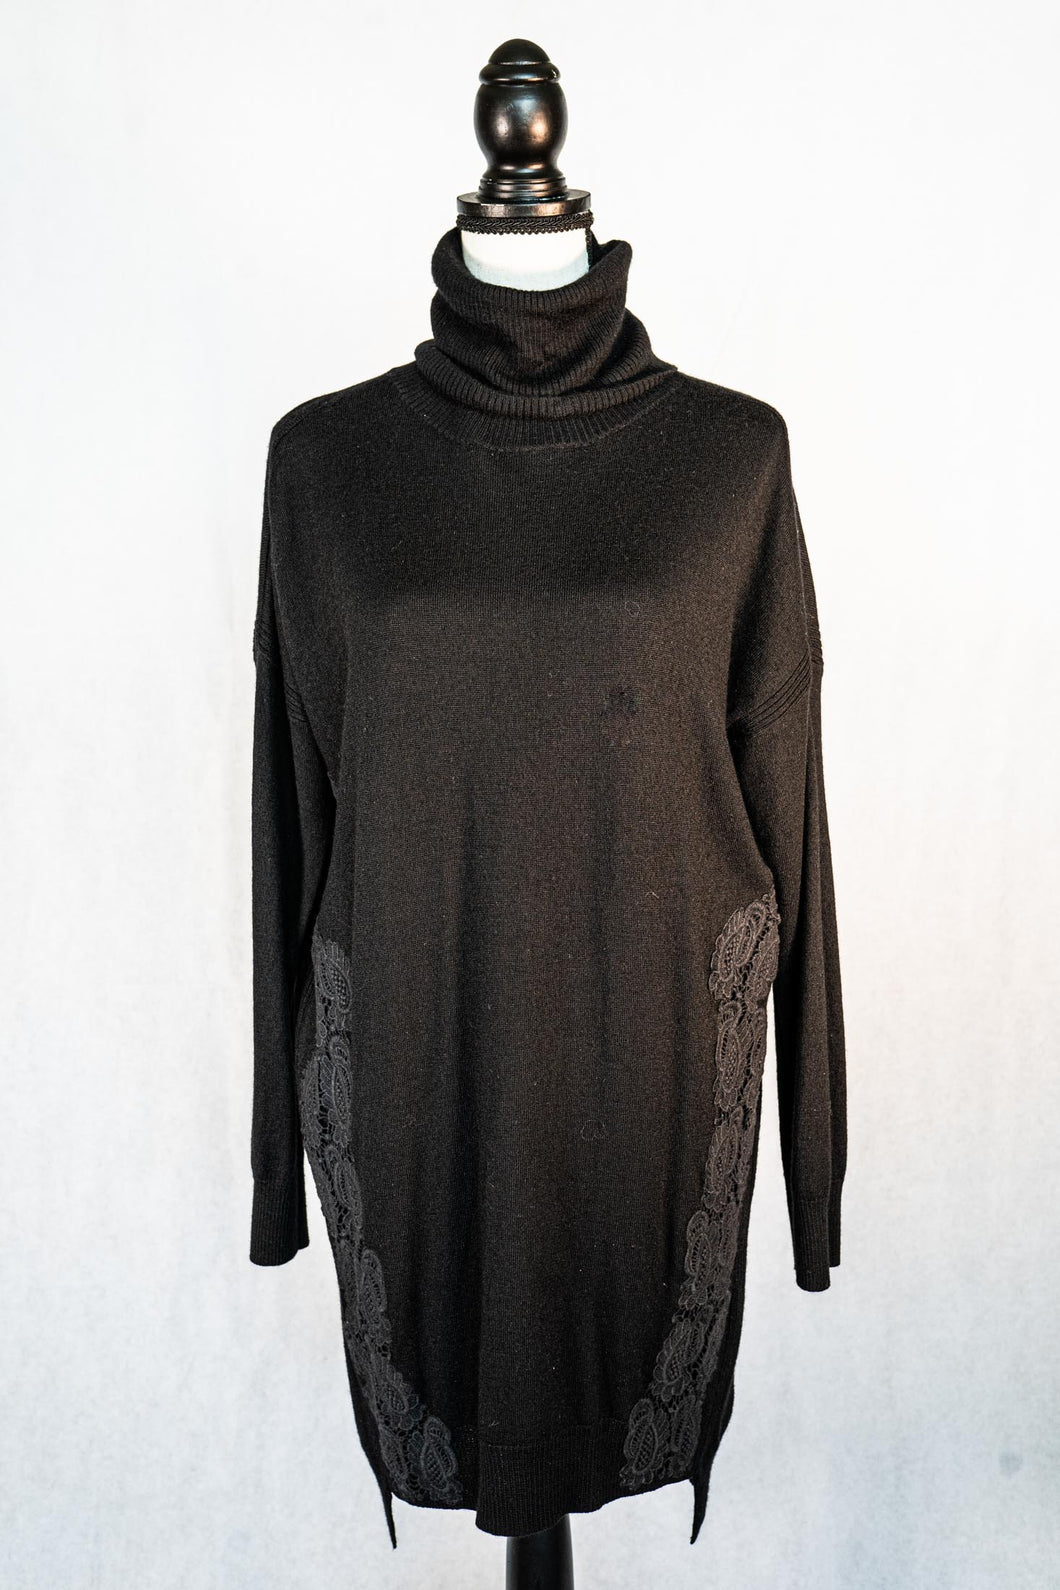 All Saints Turtleneck Black Knit Long Sleeve Tunic/Dress - Large